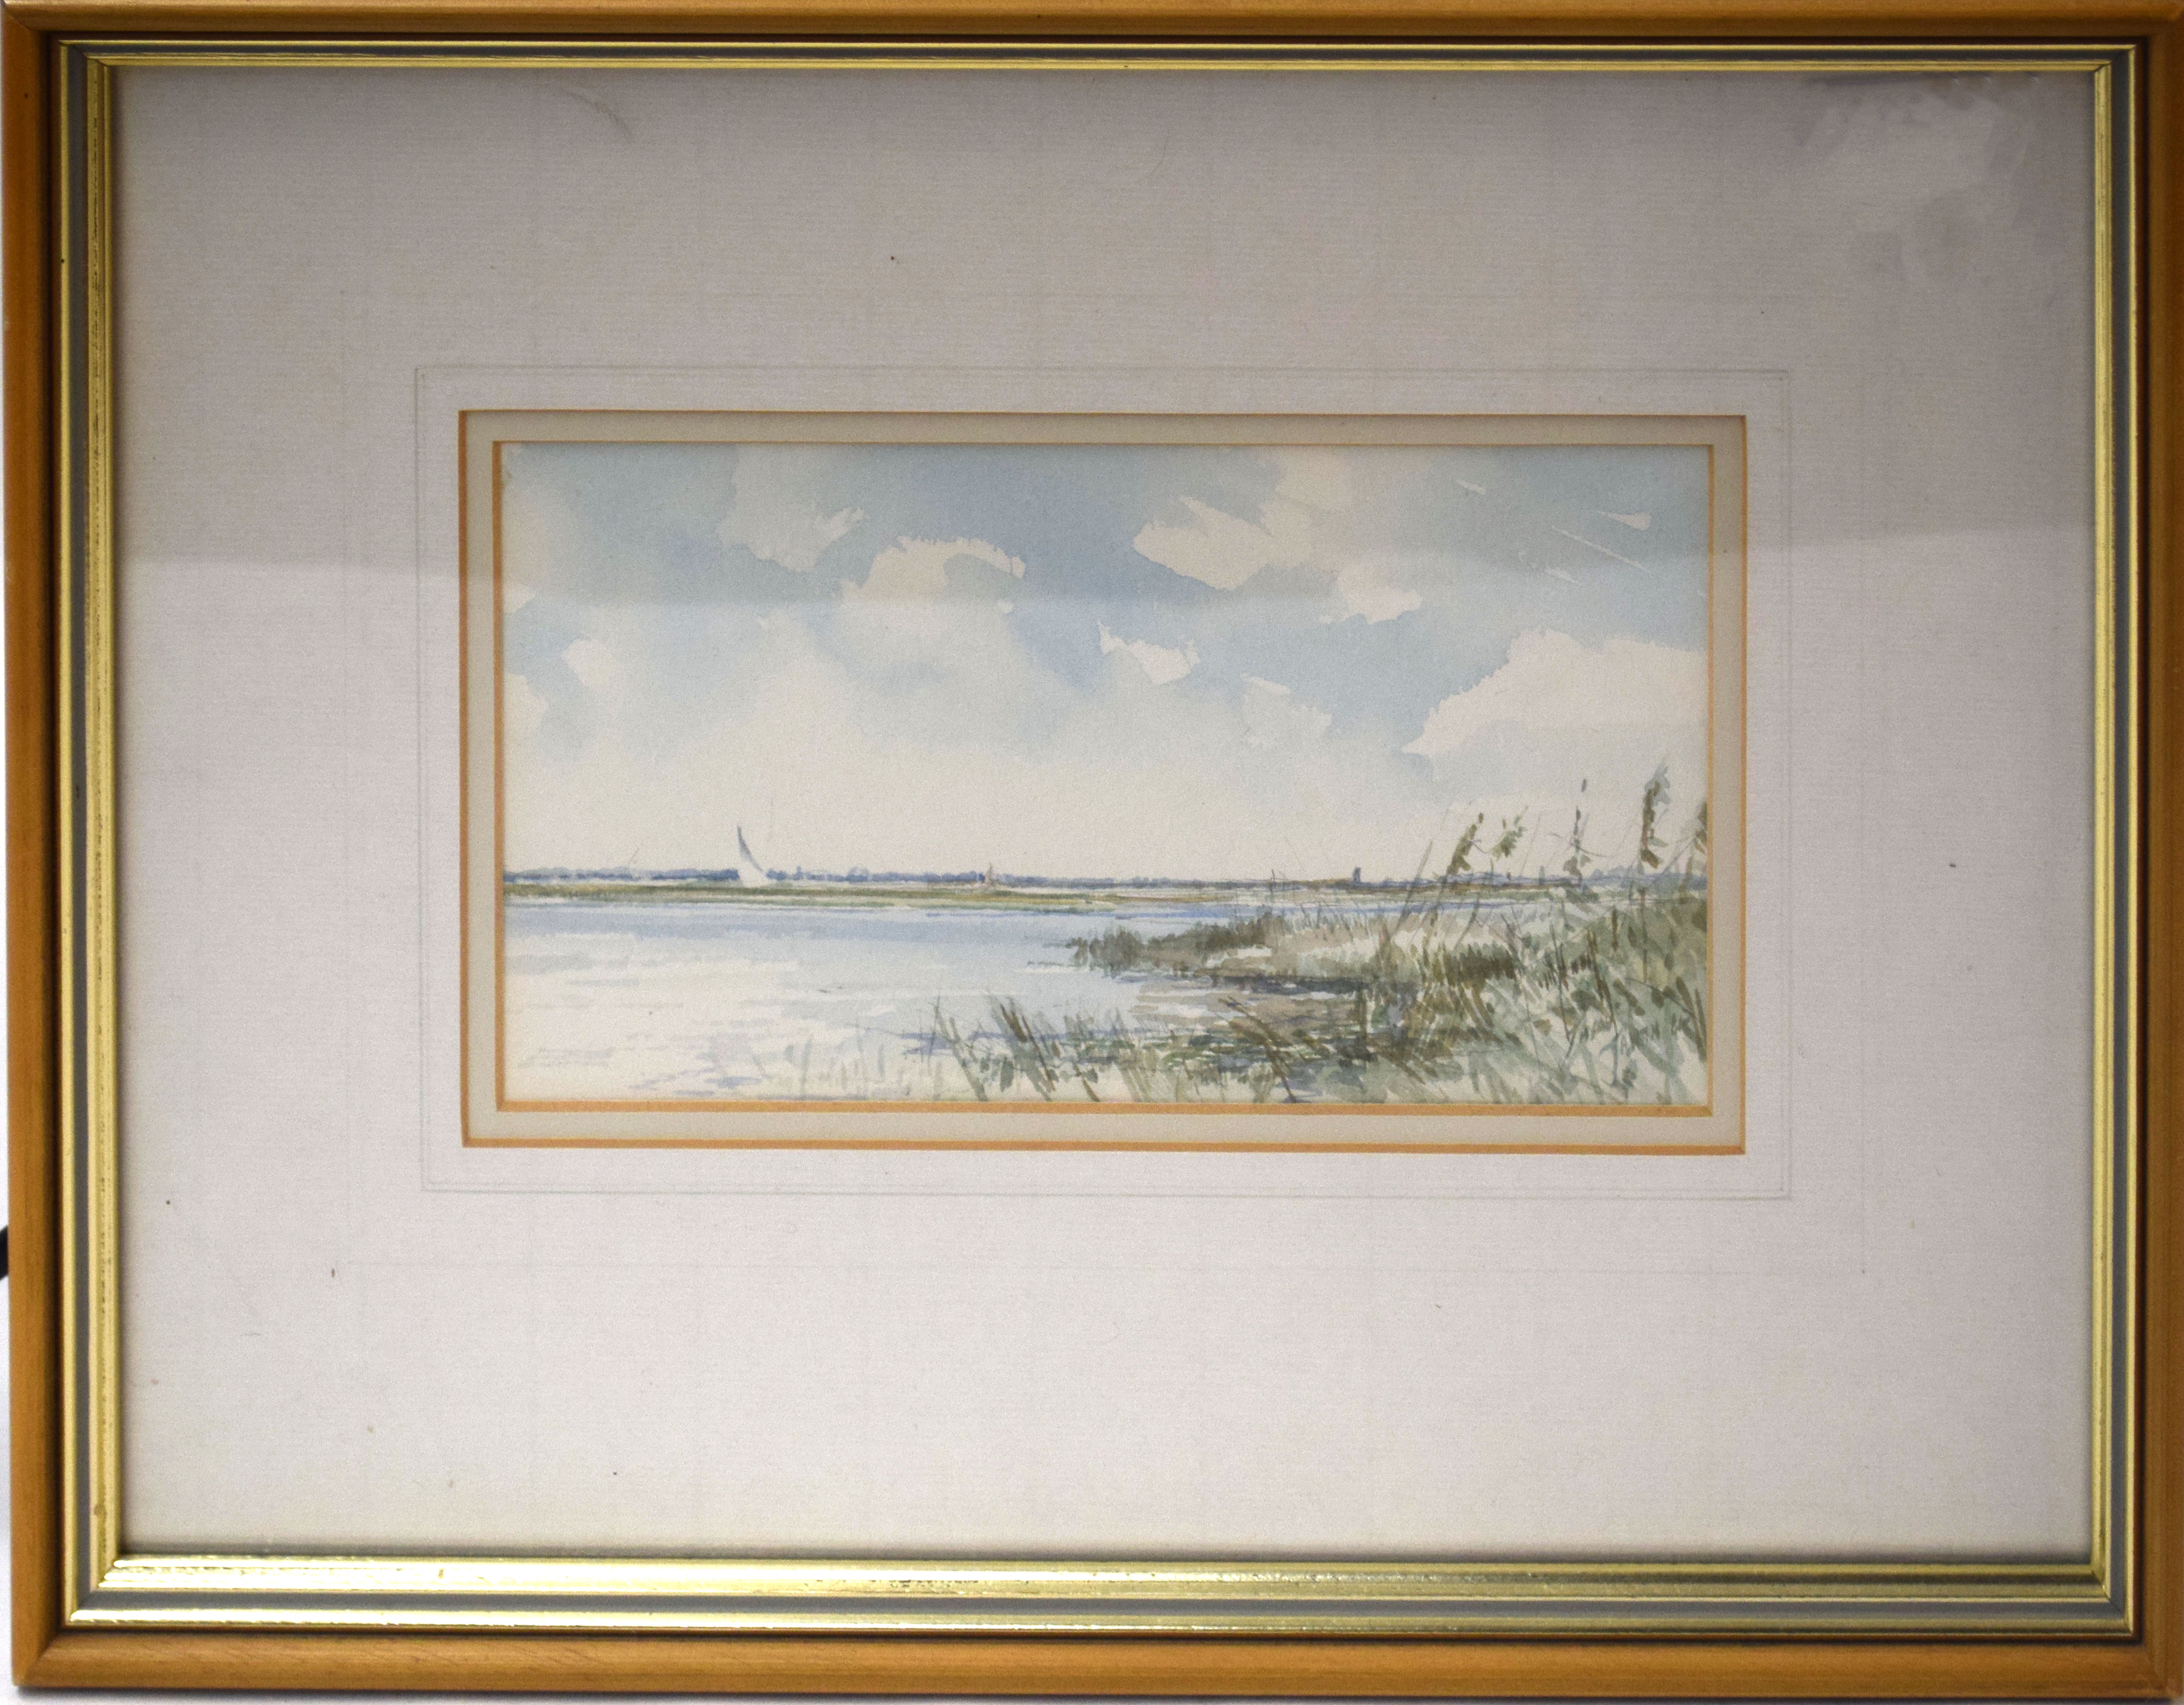 Jason Partner, "Near Breydon Water, Norfolk 1988", watercolour, signed lower right, 13 x 23cm